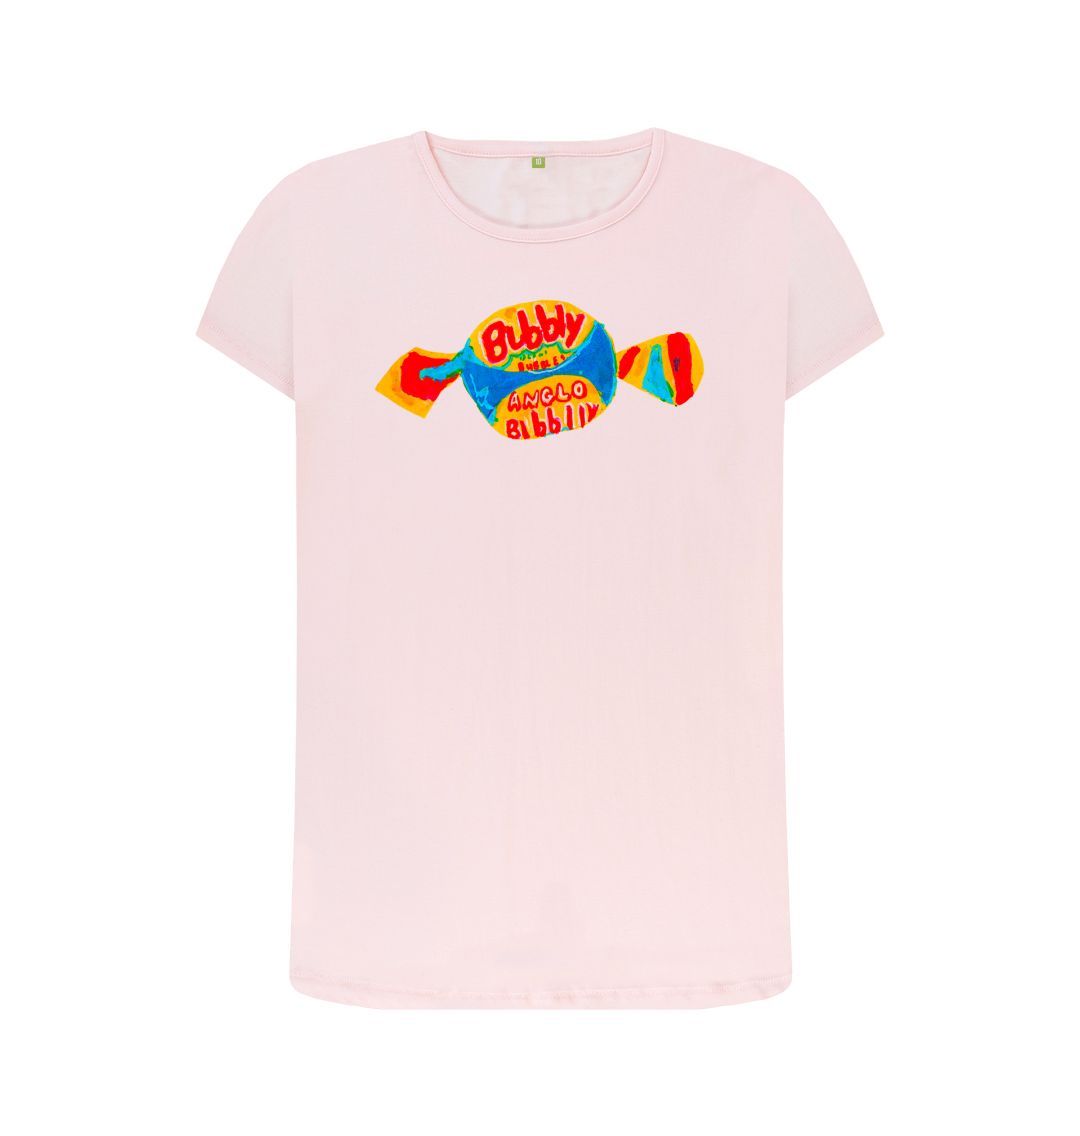 blowin' big bubbles organic women's tee - Printed T-shirt - Sarah Millin